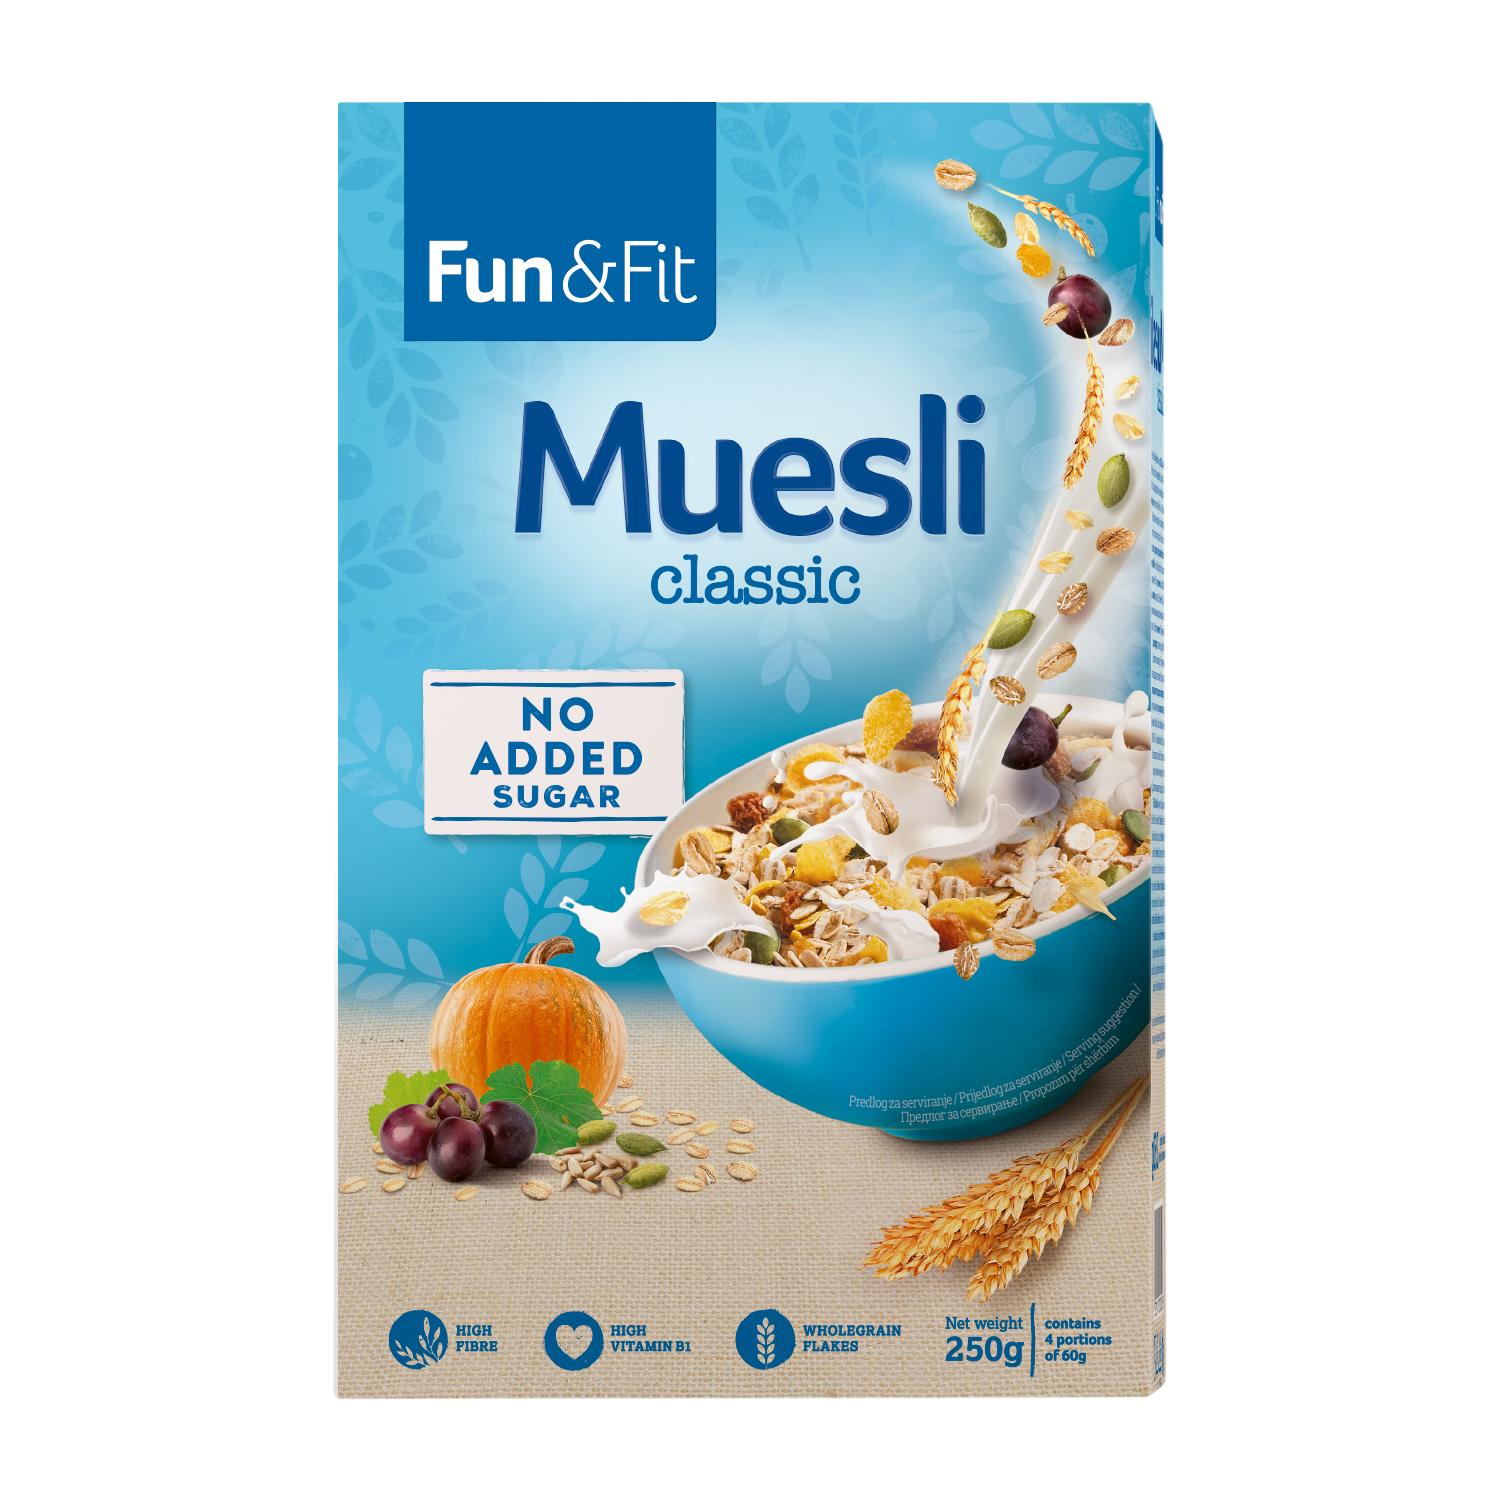 FUN&FIT Muesli classic 1kg